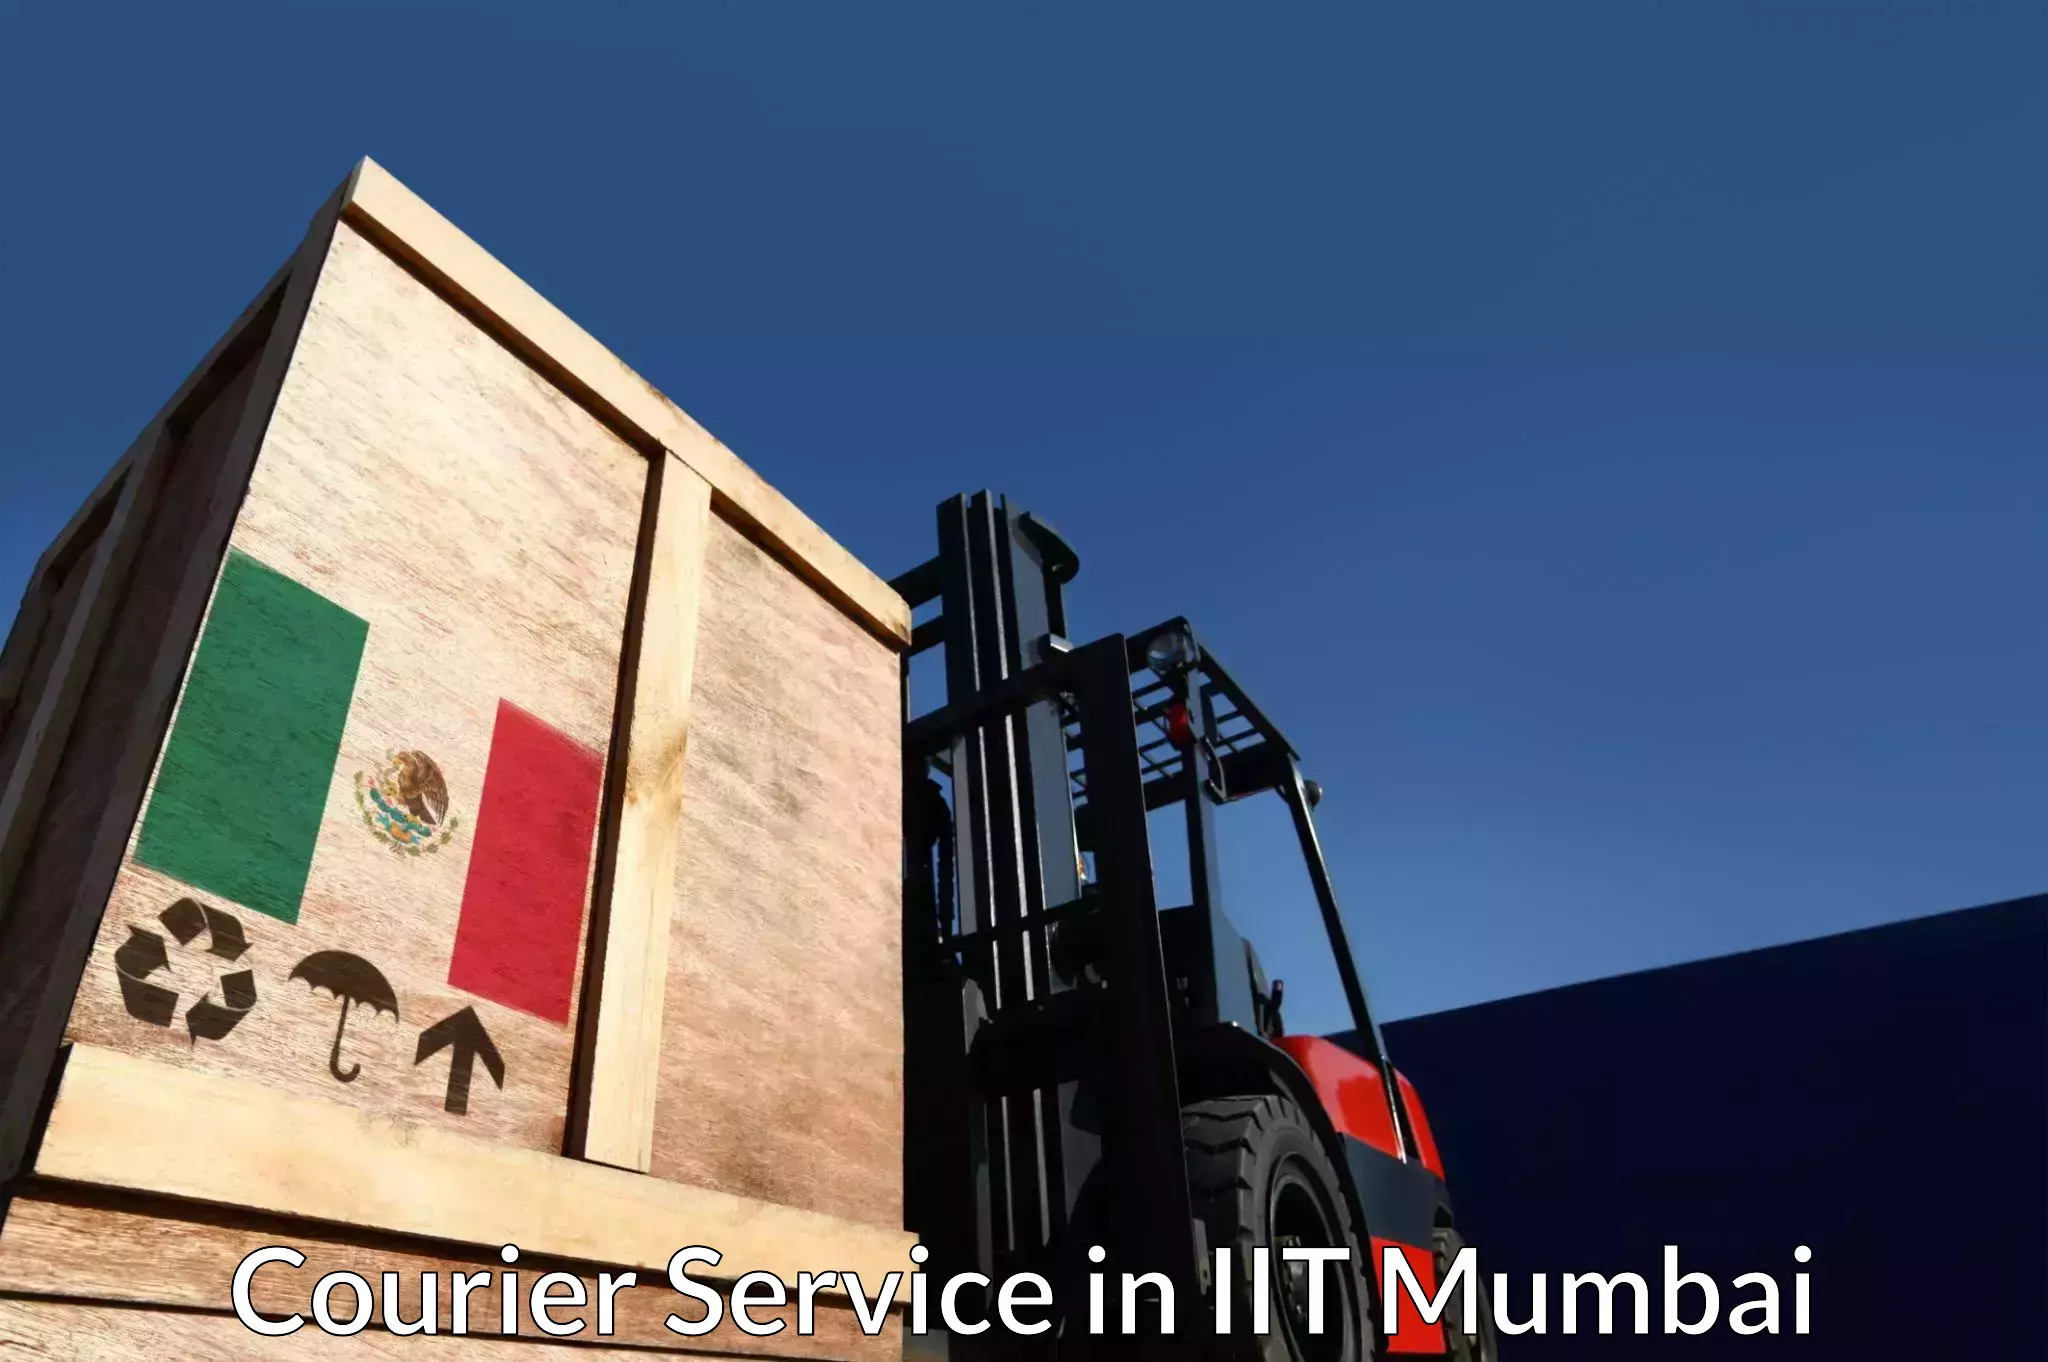 Comprehensive parcel tracking in IIT Mumbai